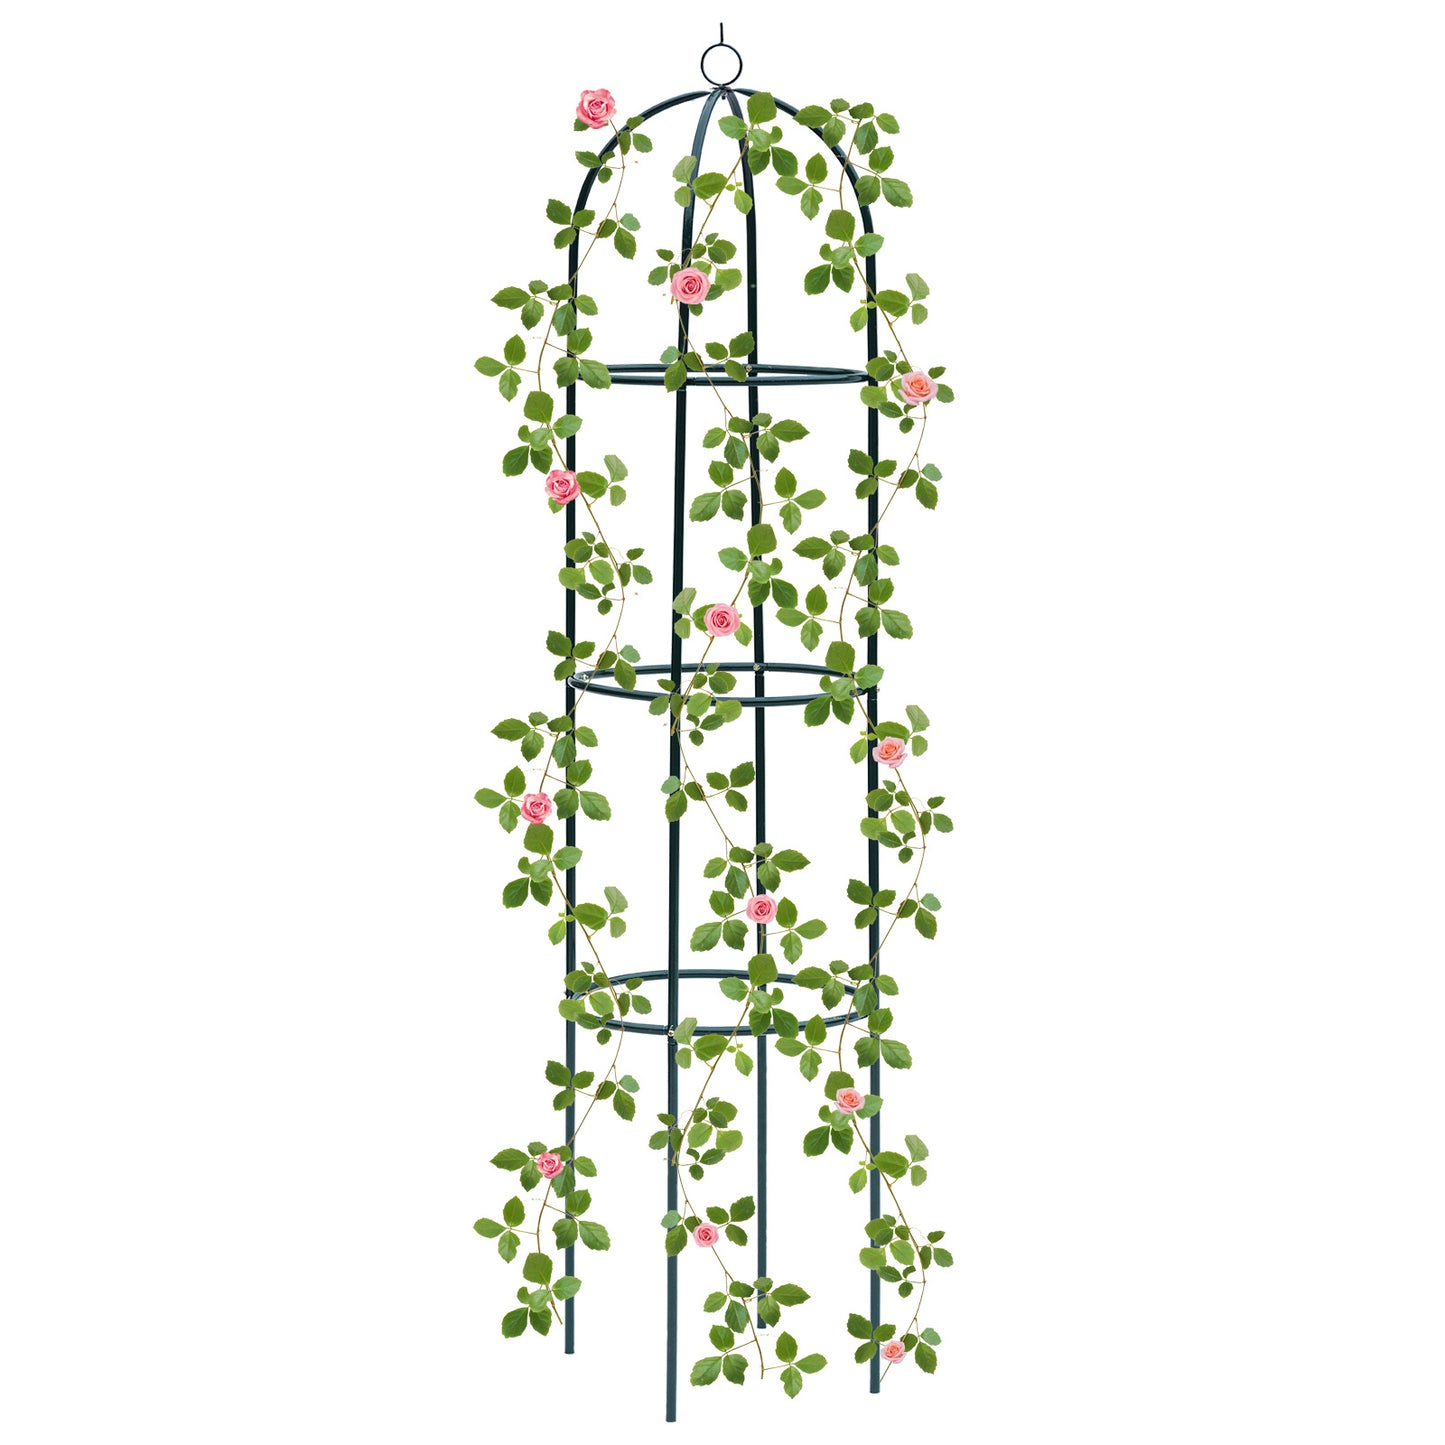 6' Obelisk Garden Tower;  Garden Trellis for Climbing Plants Outdoor;  Metal Plant Trellis Support for Potted Climbing Flowers Vegetable Vine Indoor Outdoor - Black-Green Paint Finish